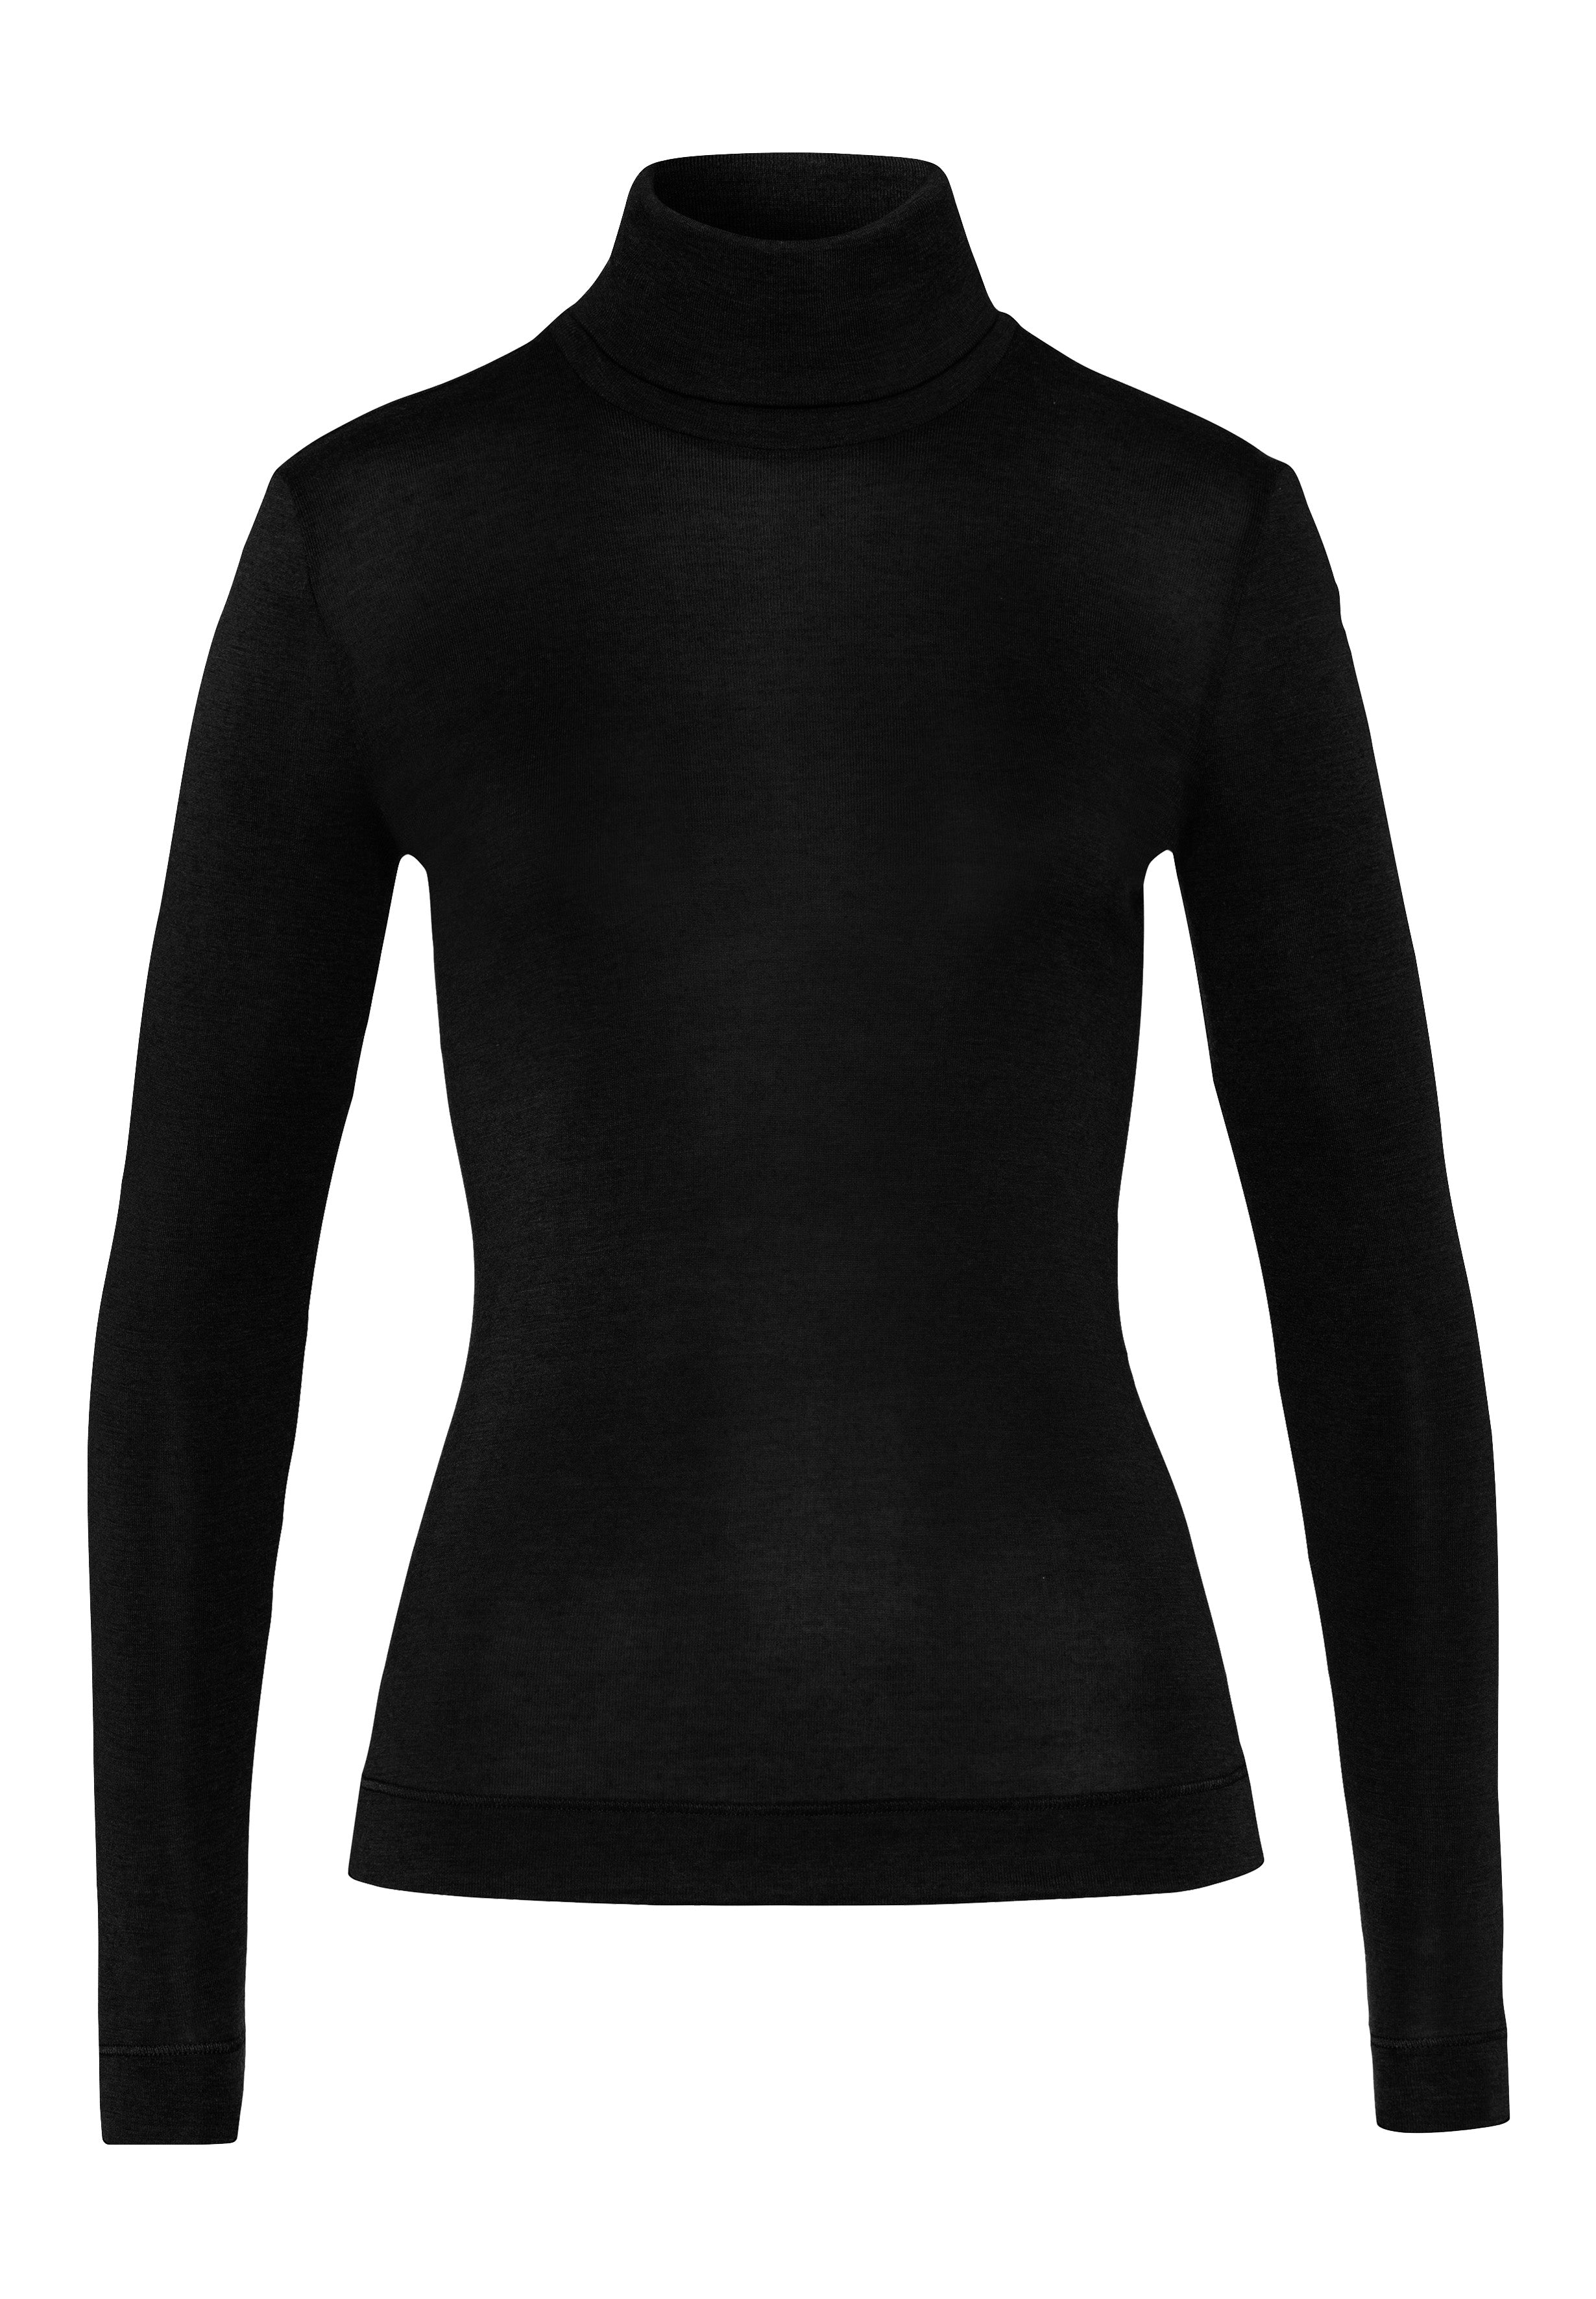 71659 Silk/Cashmere Turtleneck Shirt - 019 Black